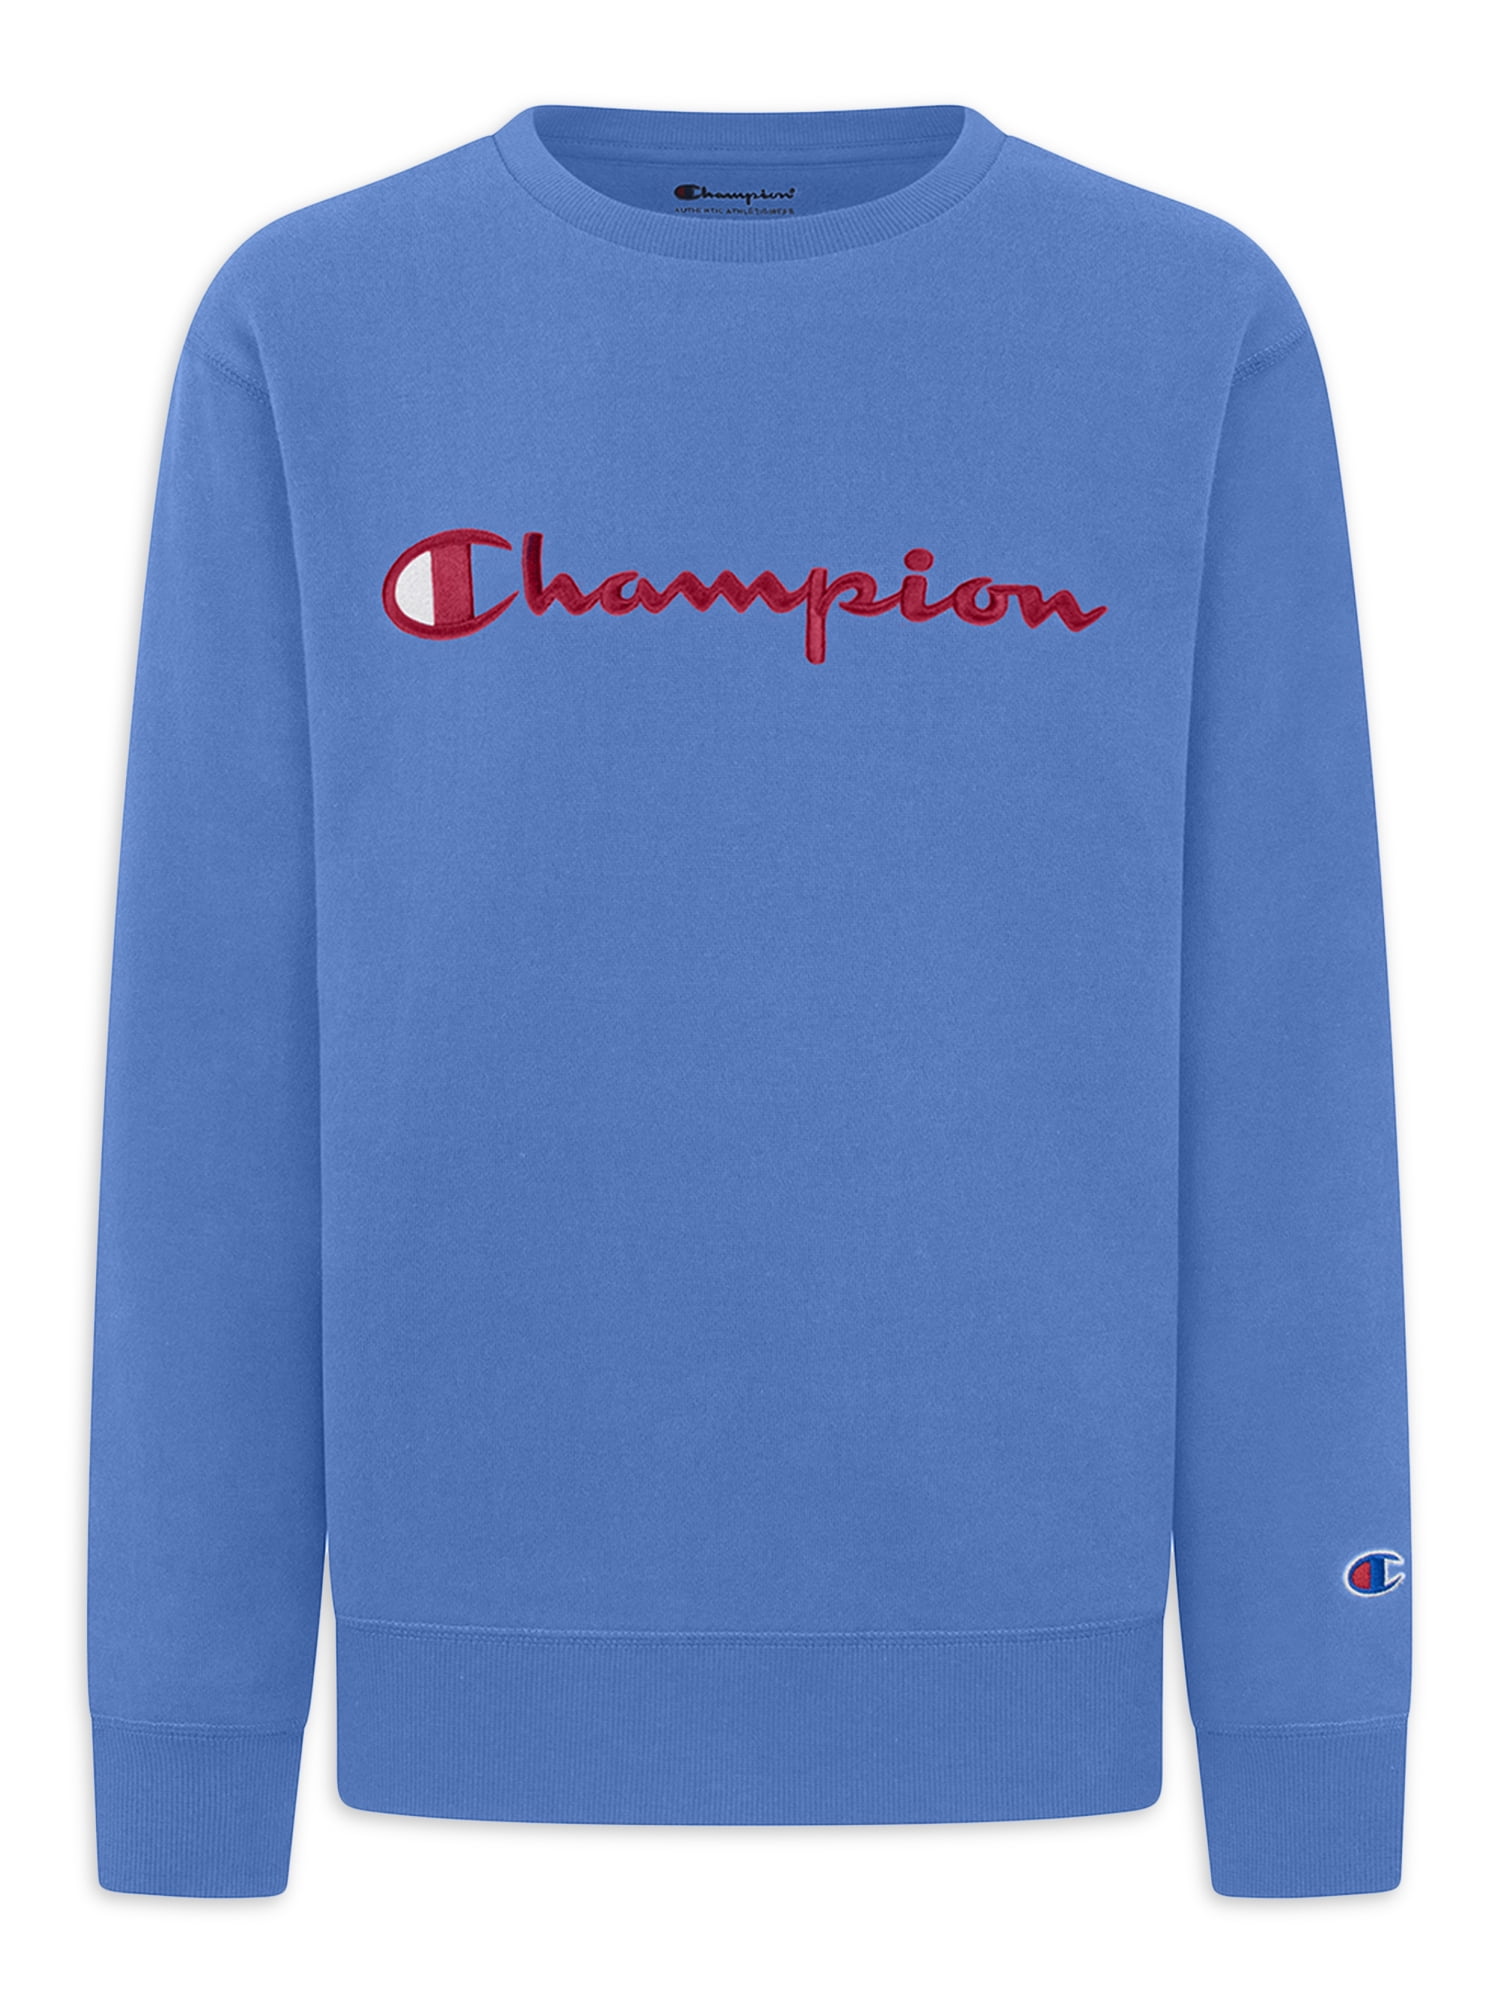 Champion Boys Signature Sweatshirt, Crewneck 8-20 Sizes Fleece